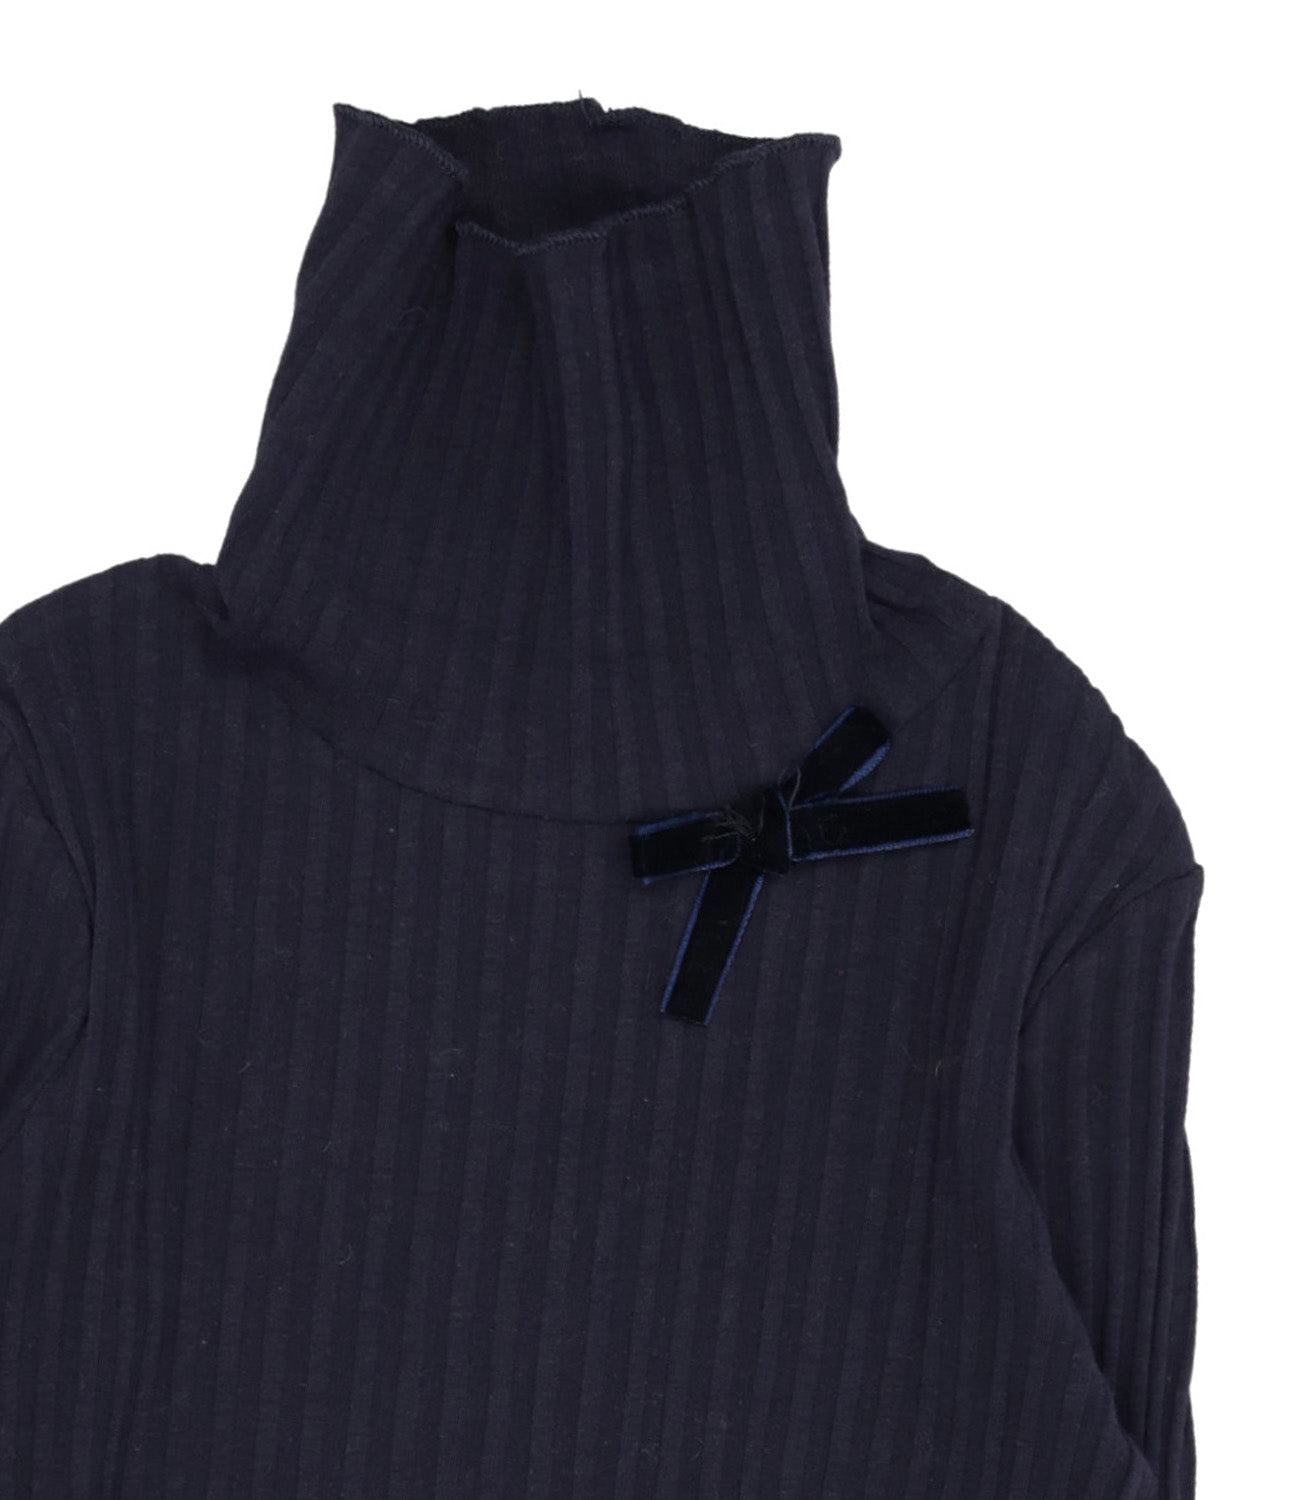 U+é By Miss Grant | Navy blue turtleneck sweater